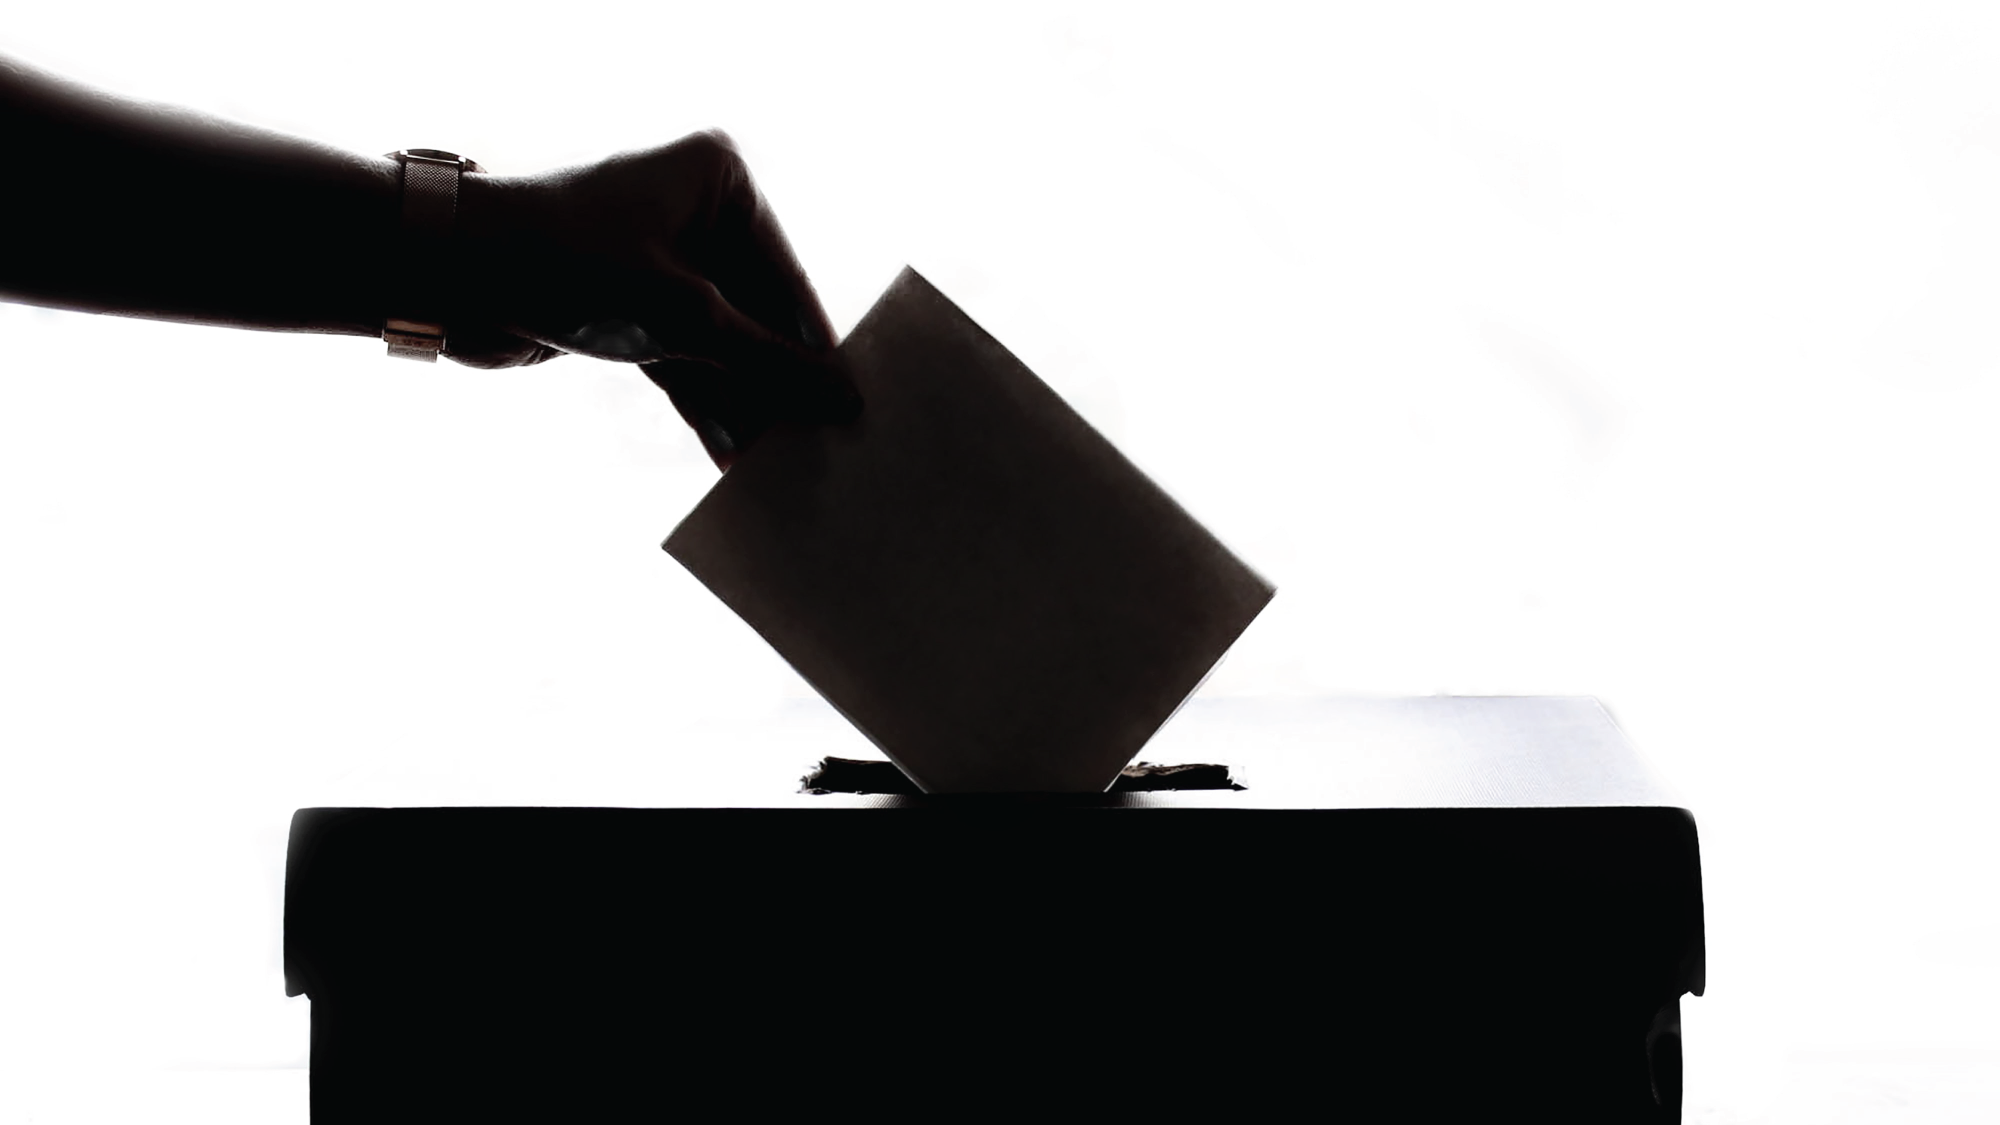 A person puts a ballot into a box.